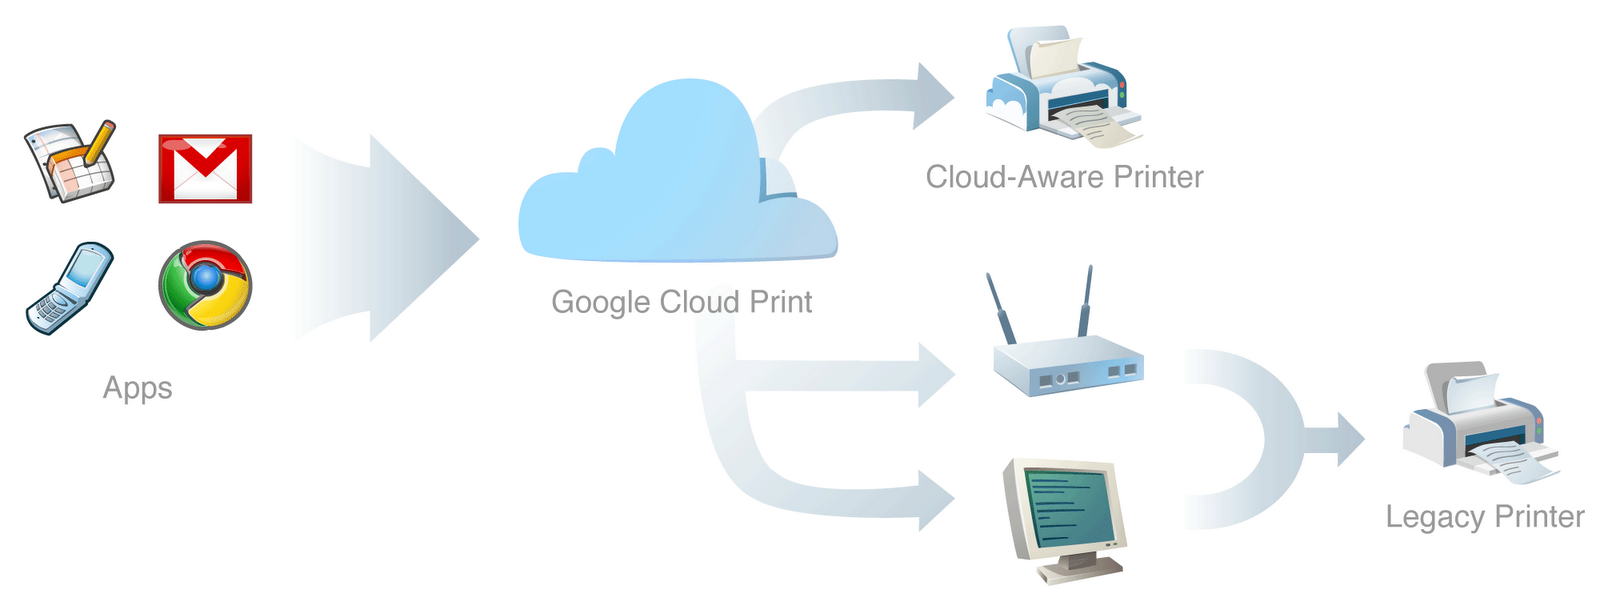 google-cloud-print-system